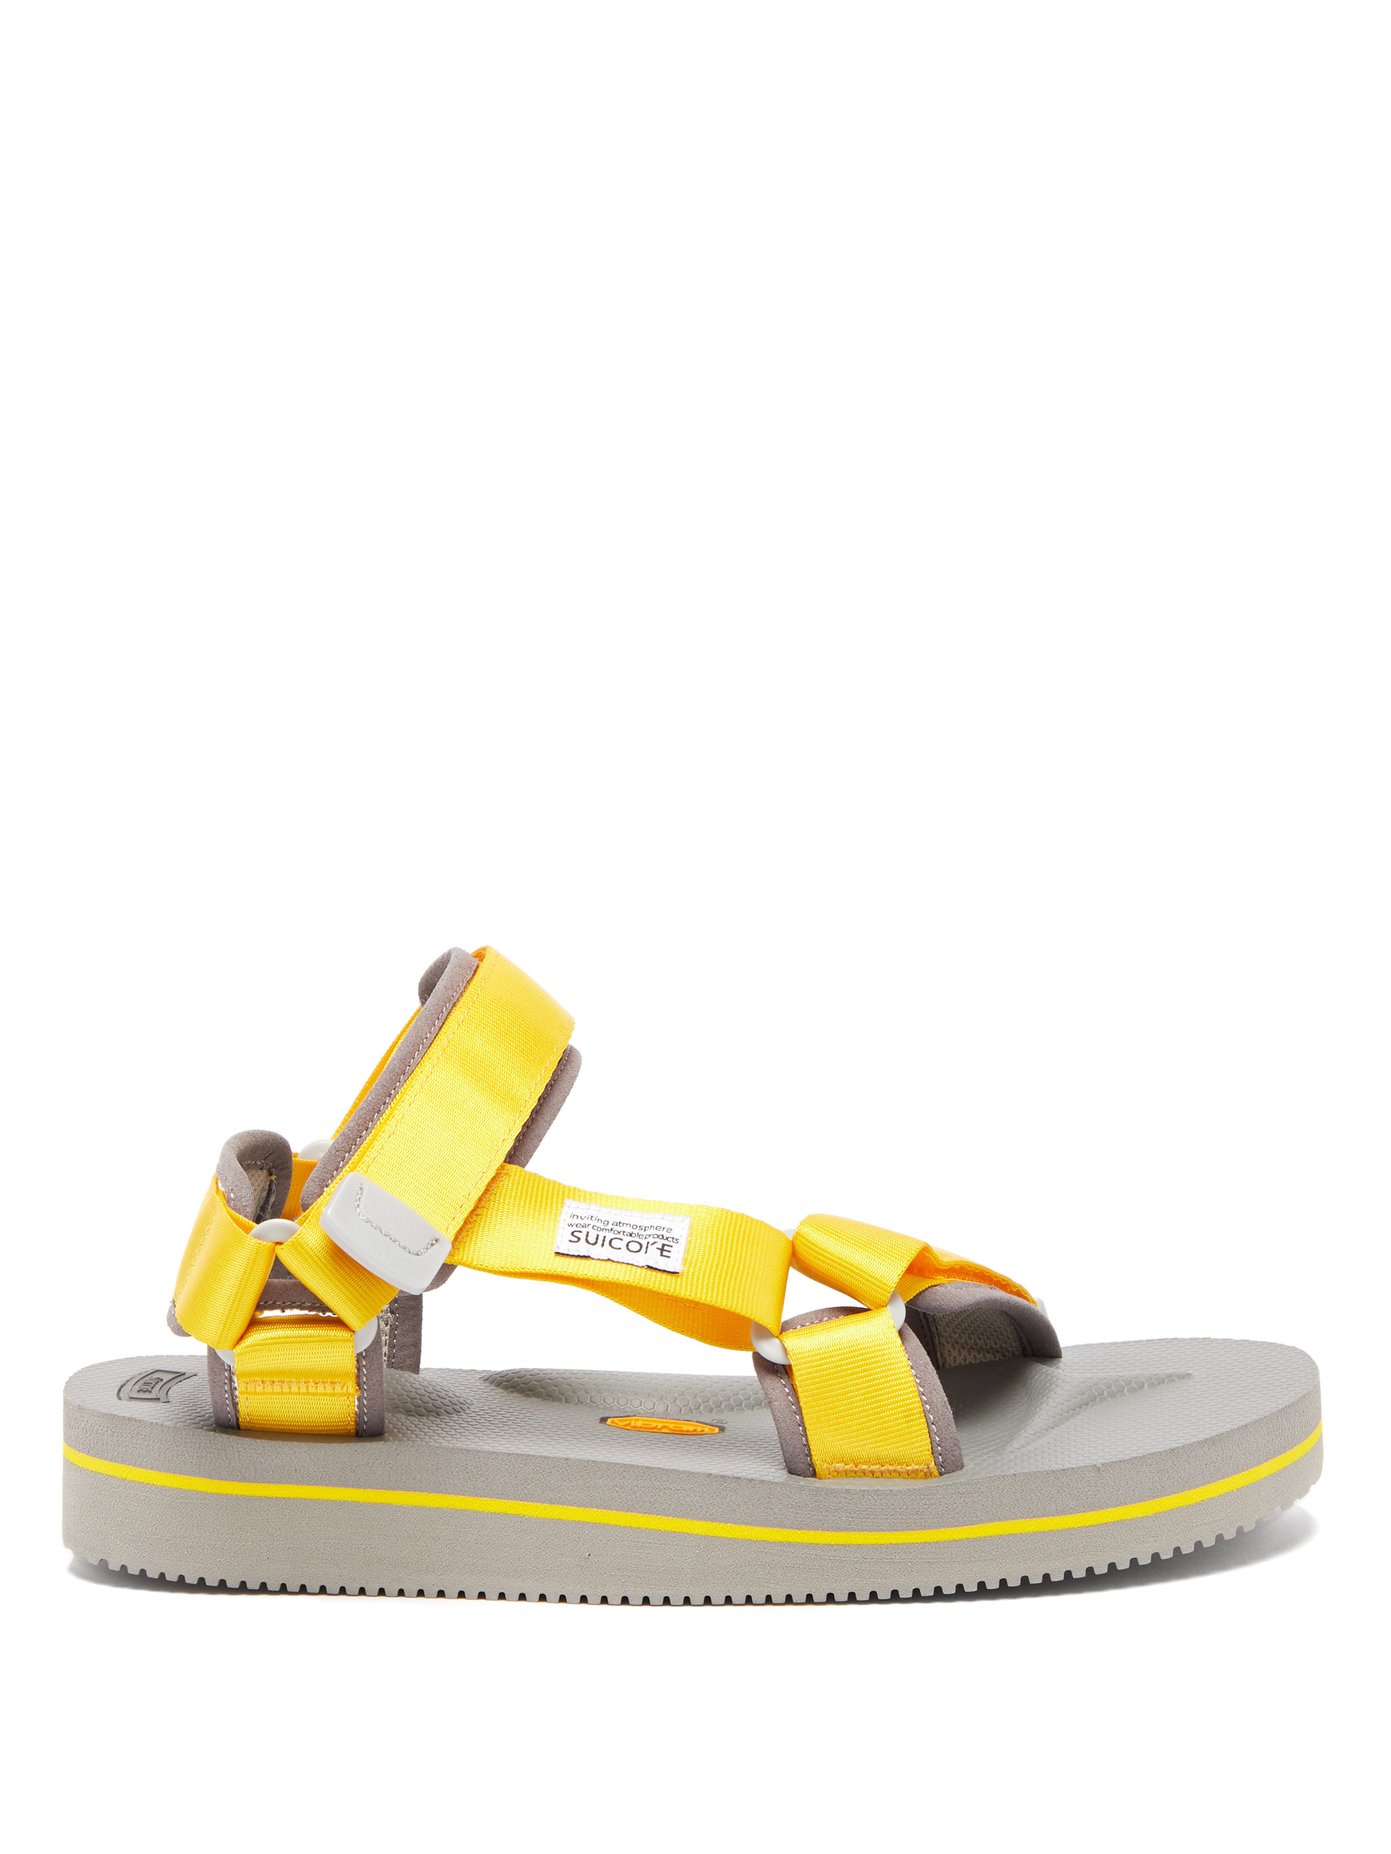 Depa-V2 technical sandals | Suicoke 